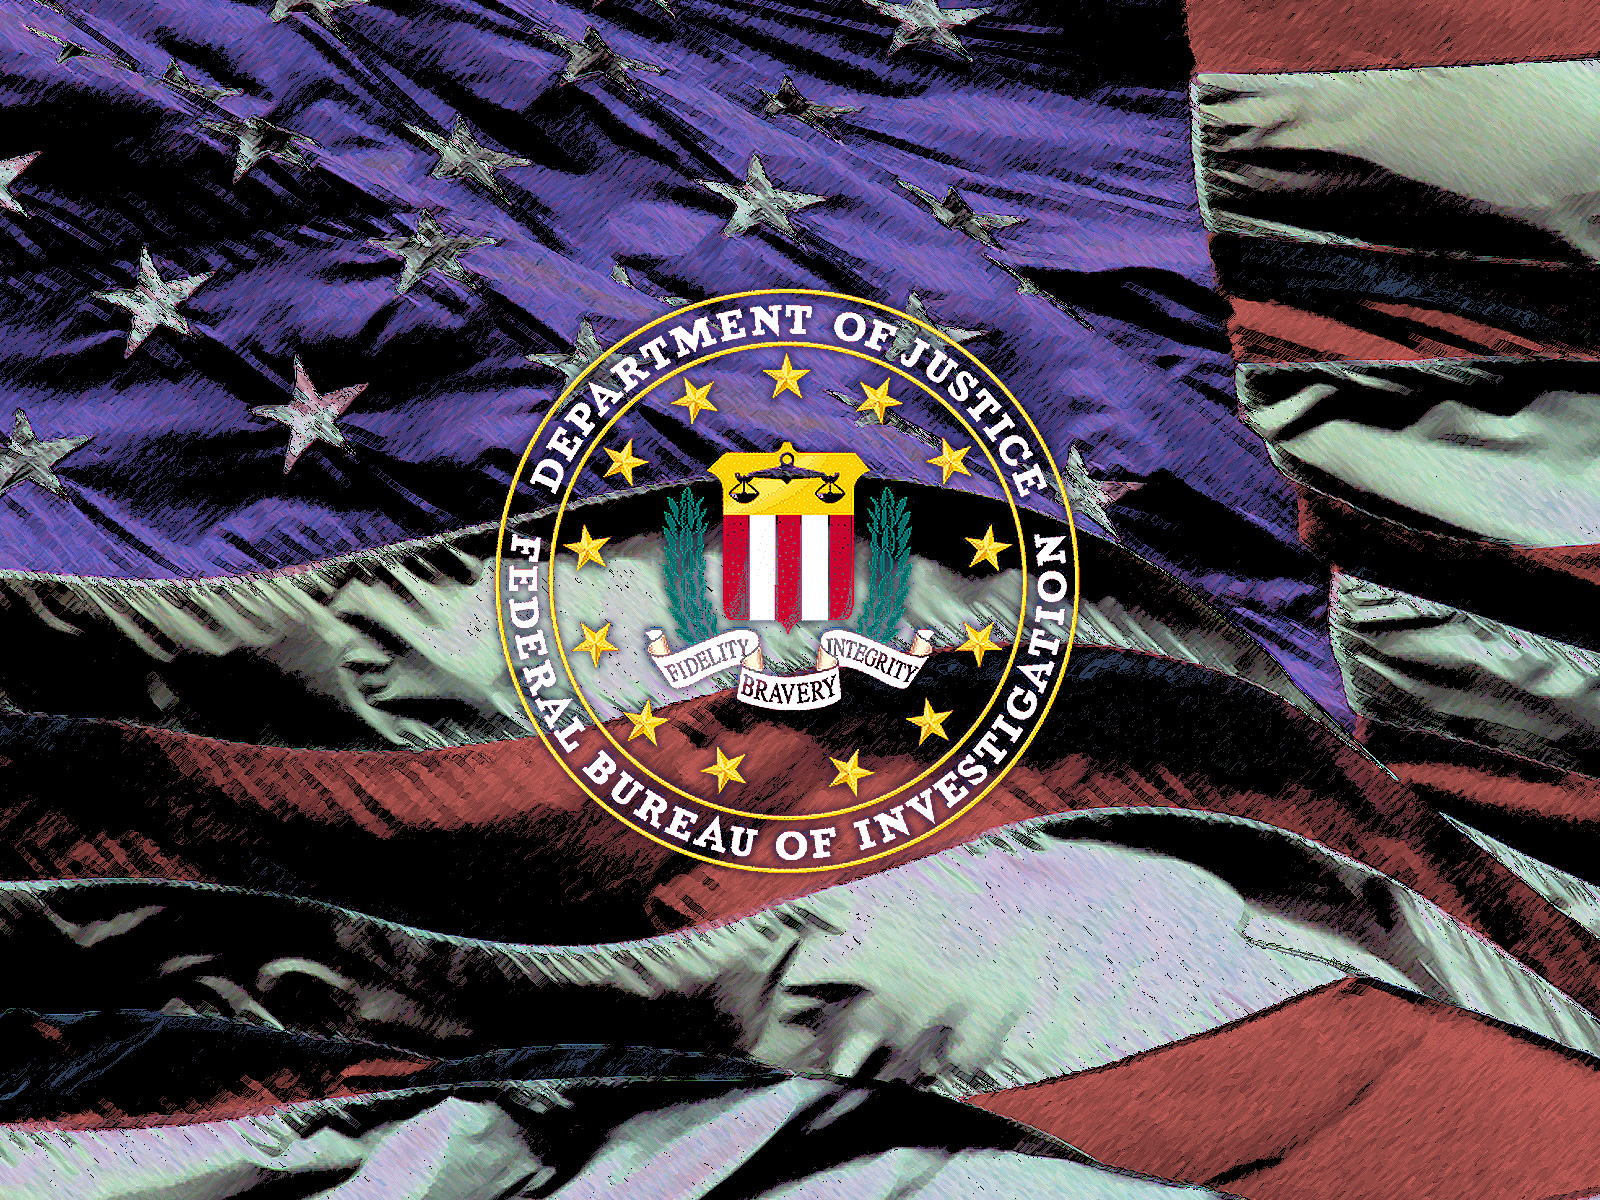 Federal Bureau Of Investigation Logo Wallpaper Widescreen